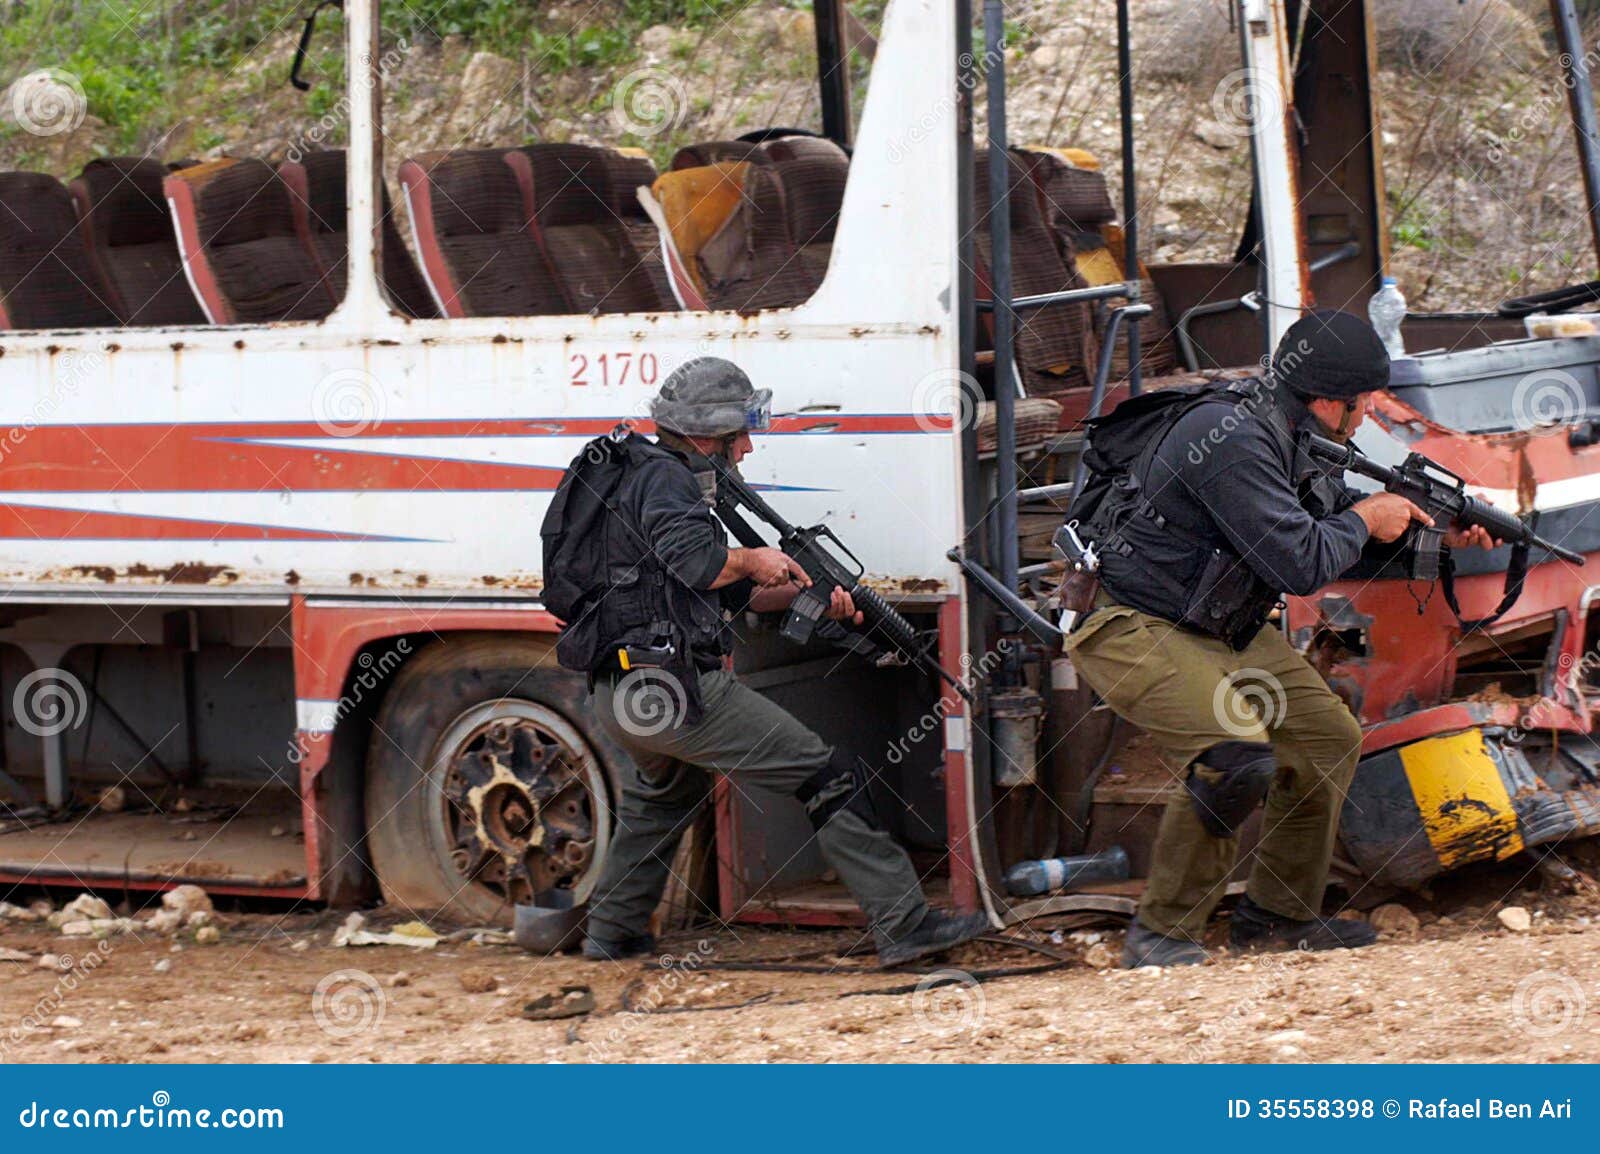 anti terrorist squads practicing rescue hijacked bus negev isr jan jan coastal road massacre israeli civilians 35558398